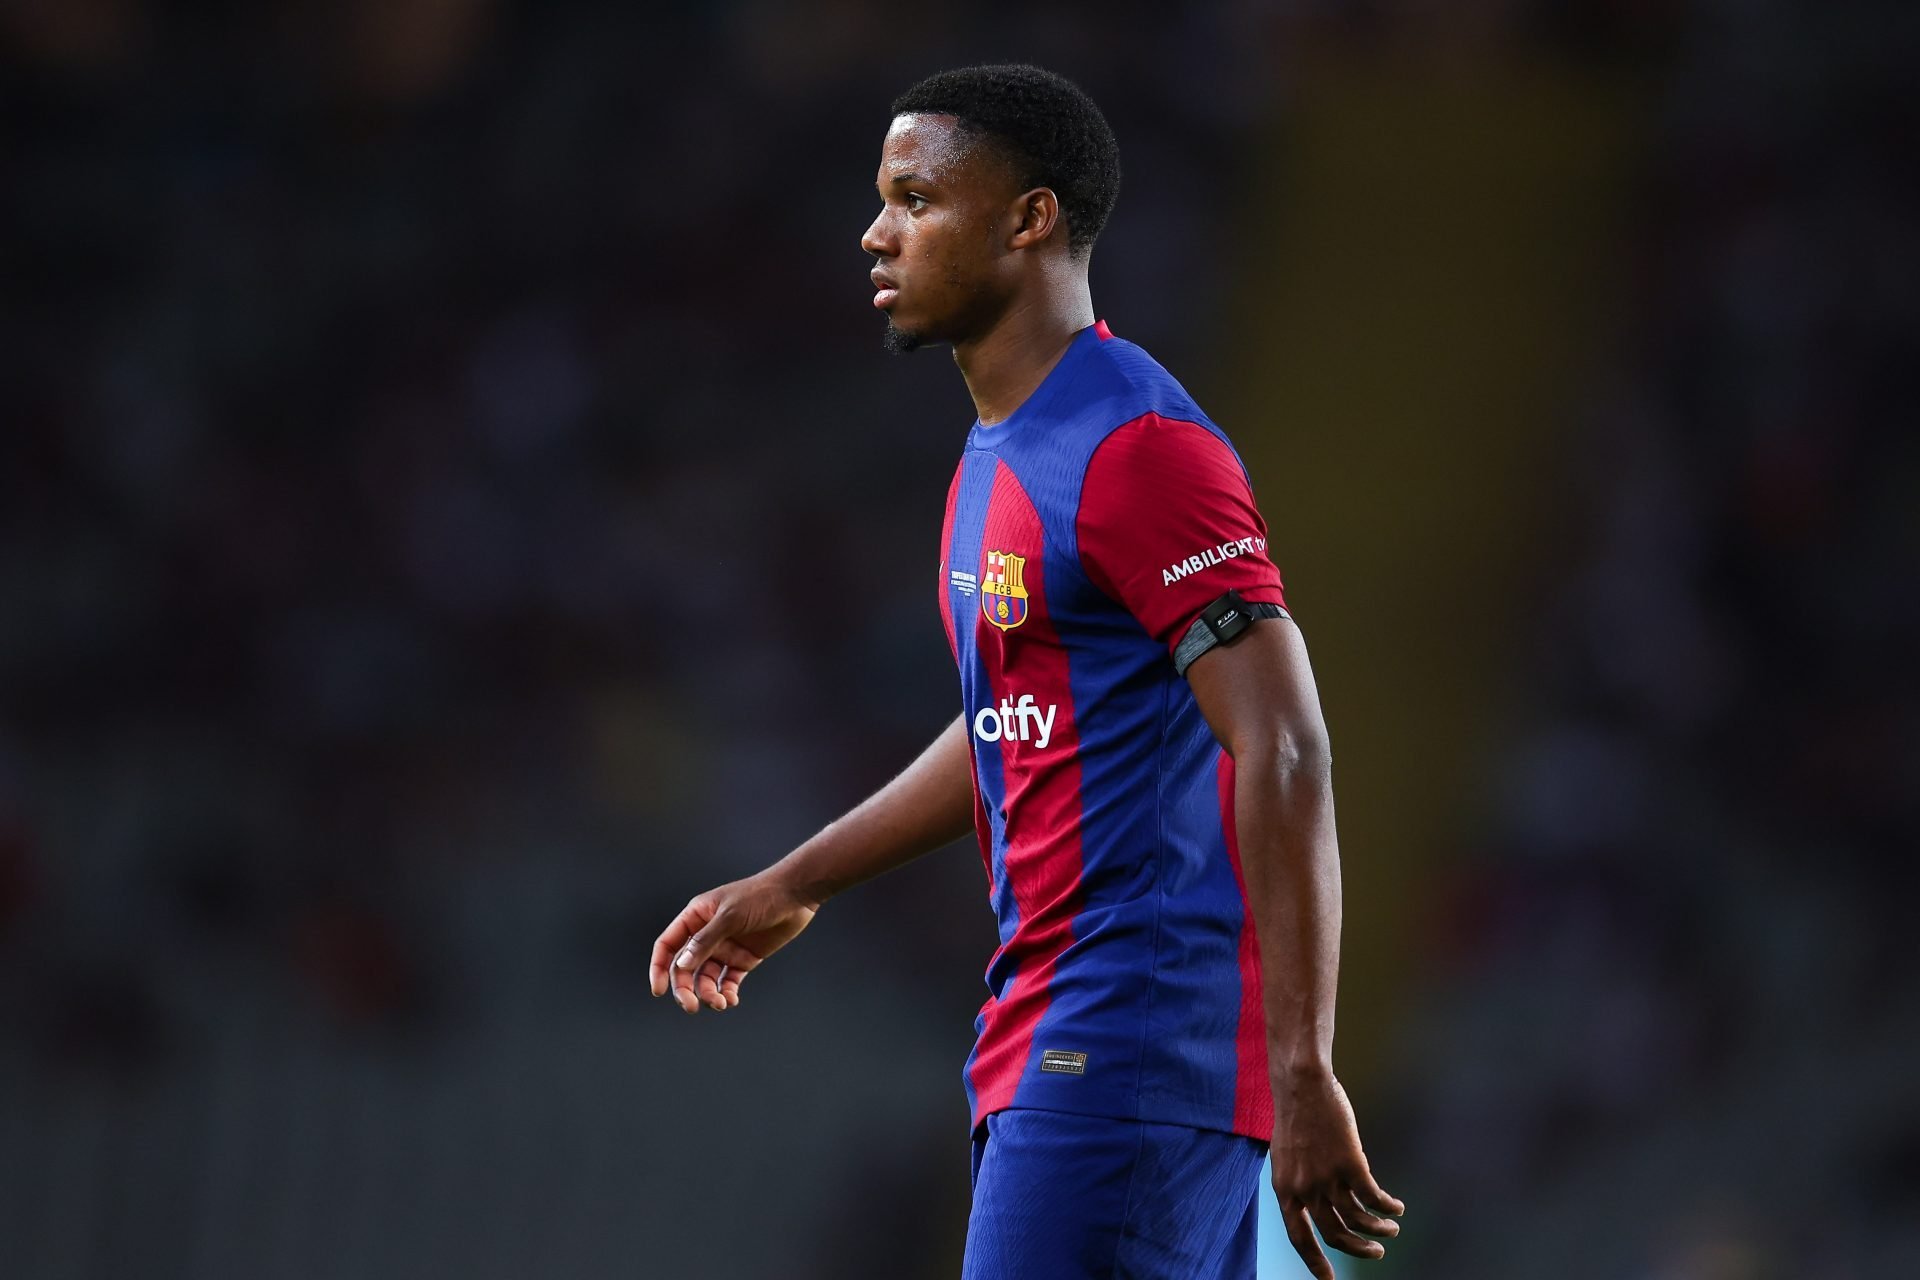 Barcelona forward returns to training ahead of schedule amid uncertain future